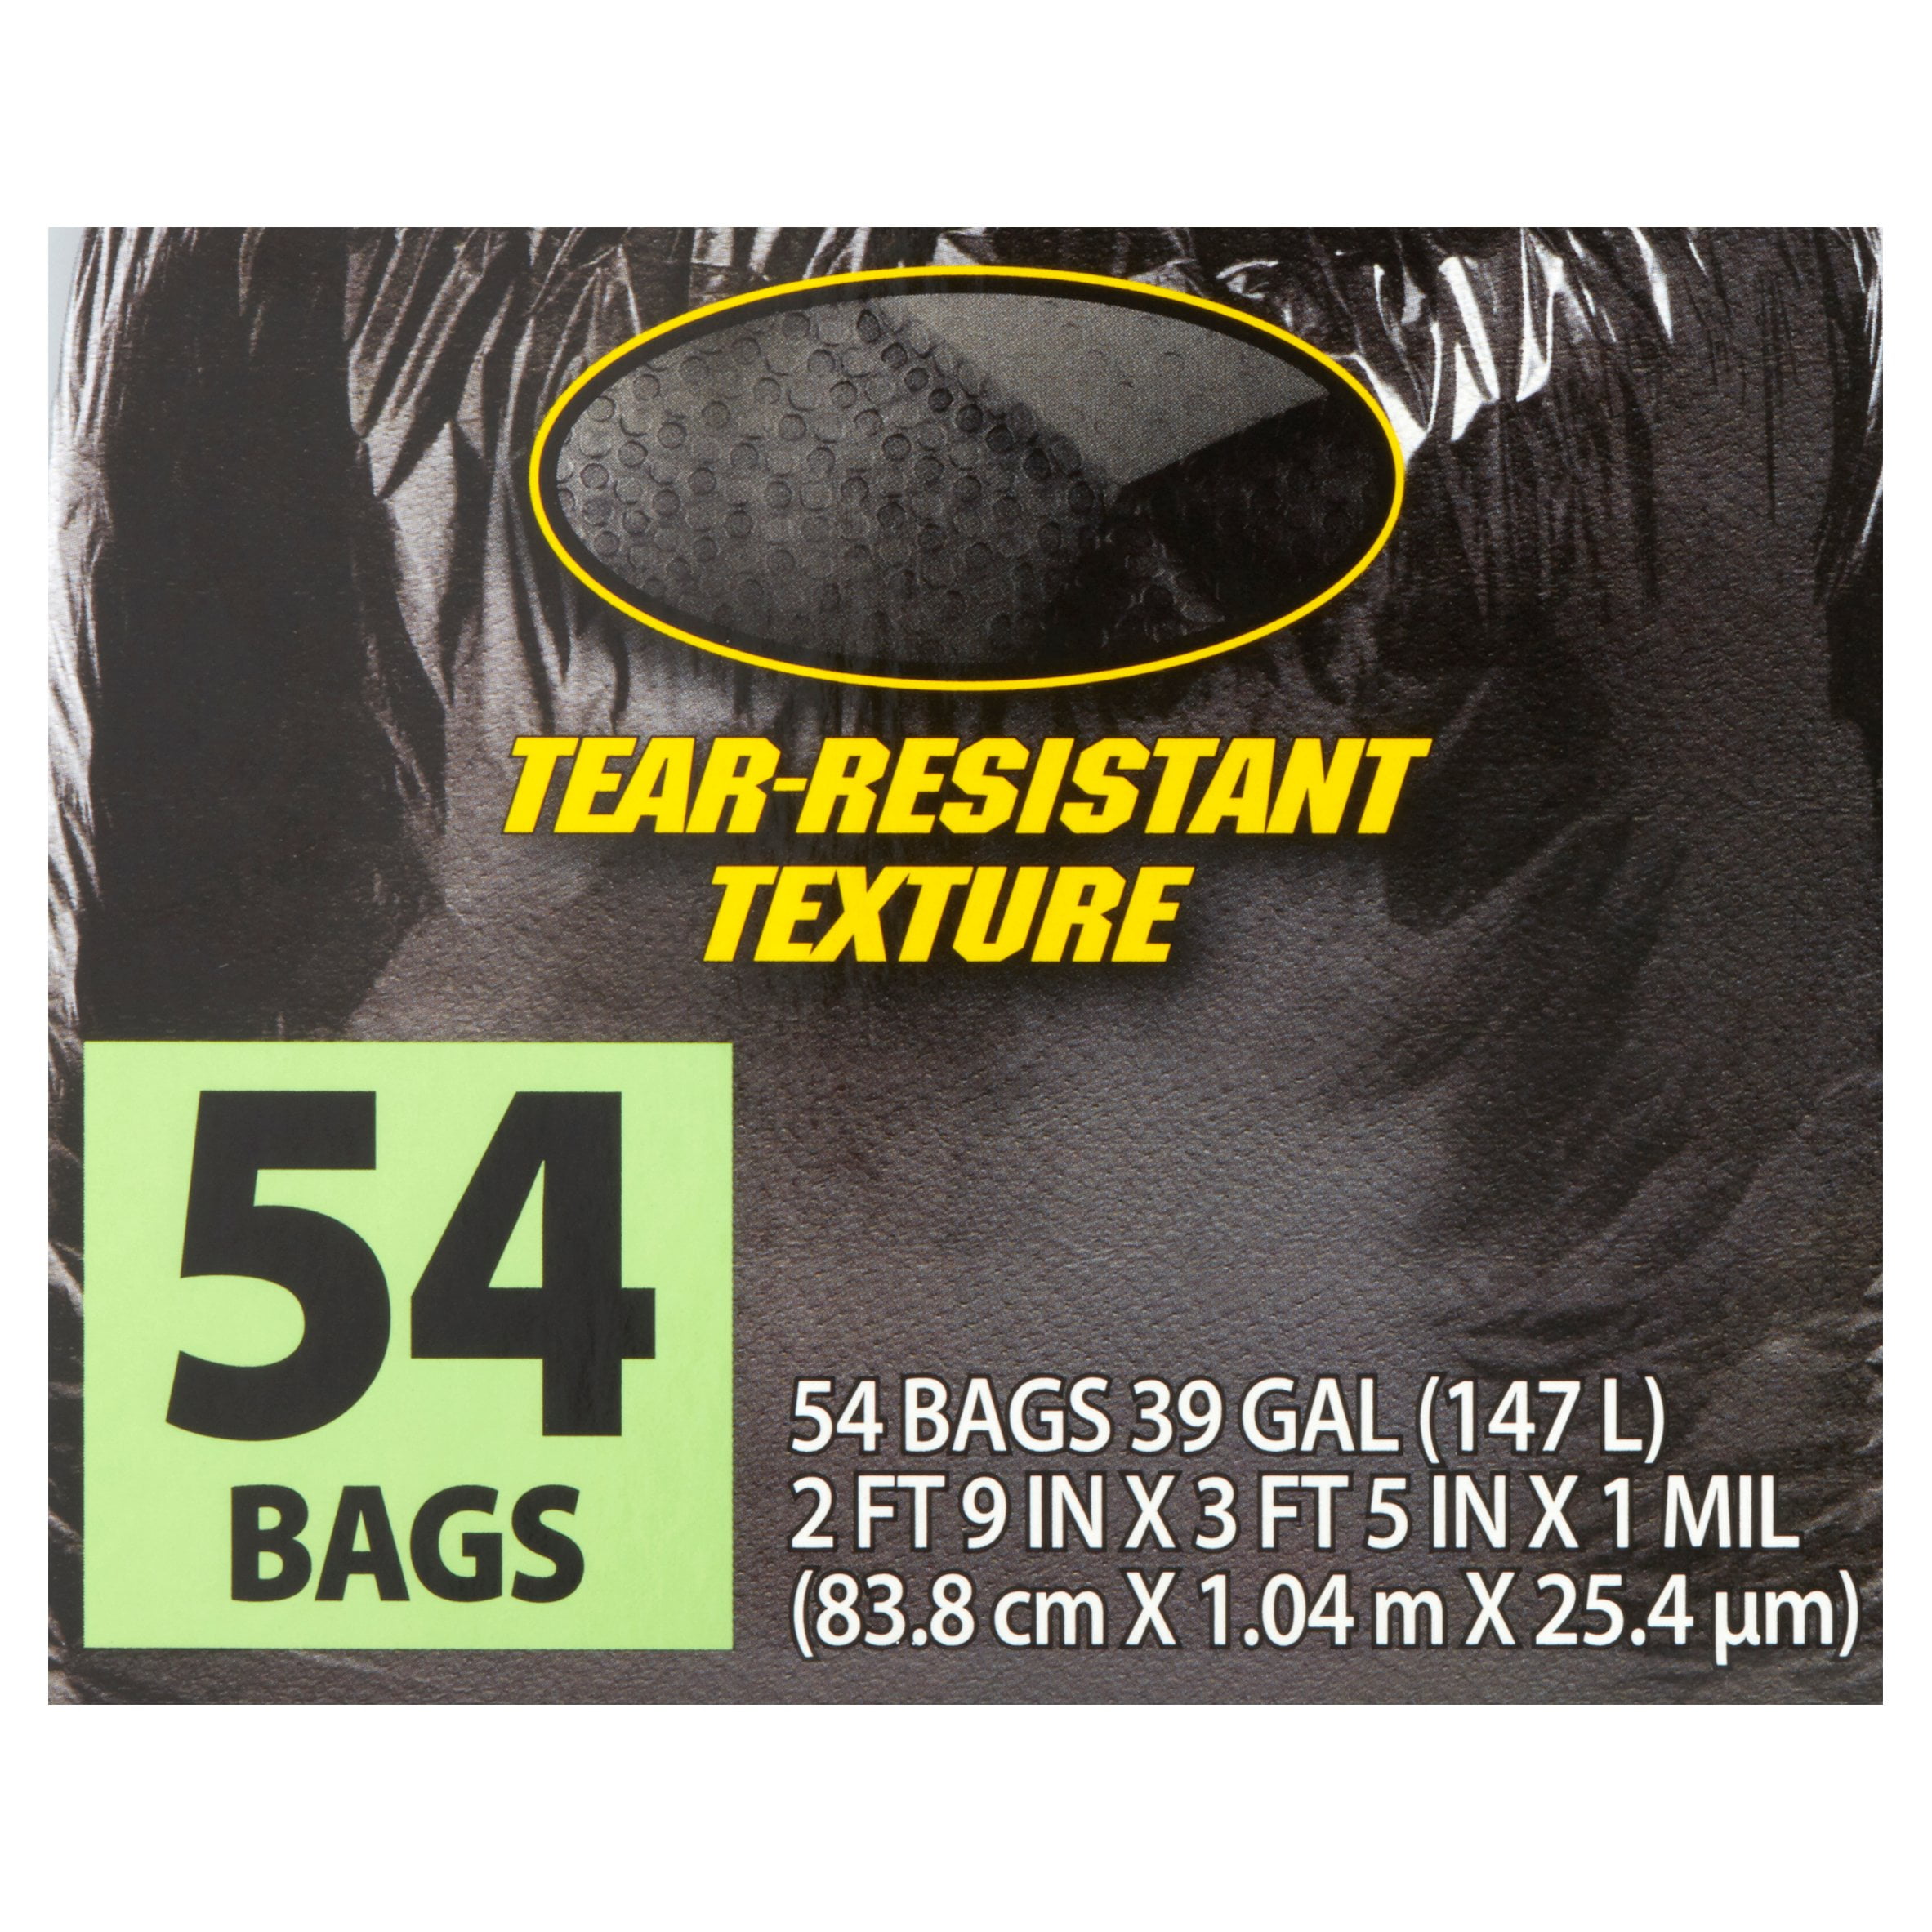 Husky 39 Gallon Drawstring Trash Bags, 27-Count